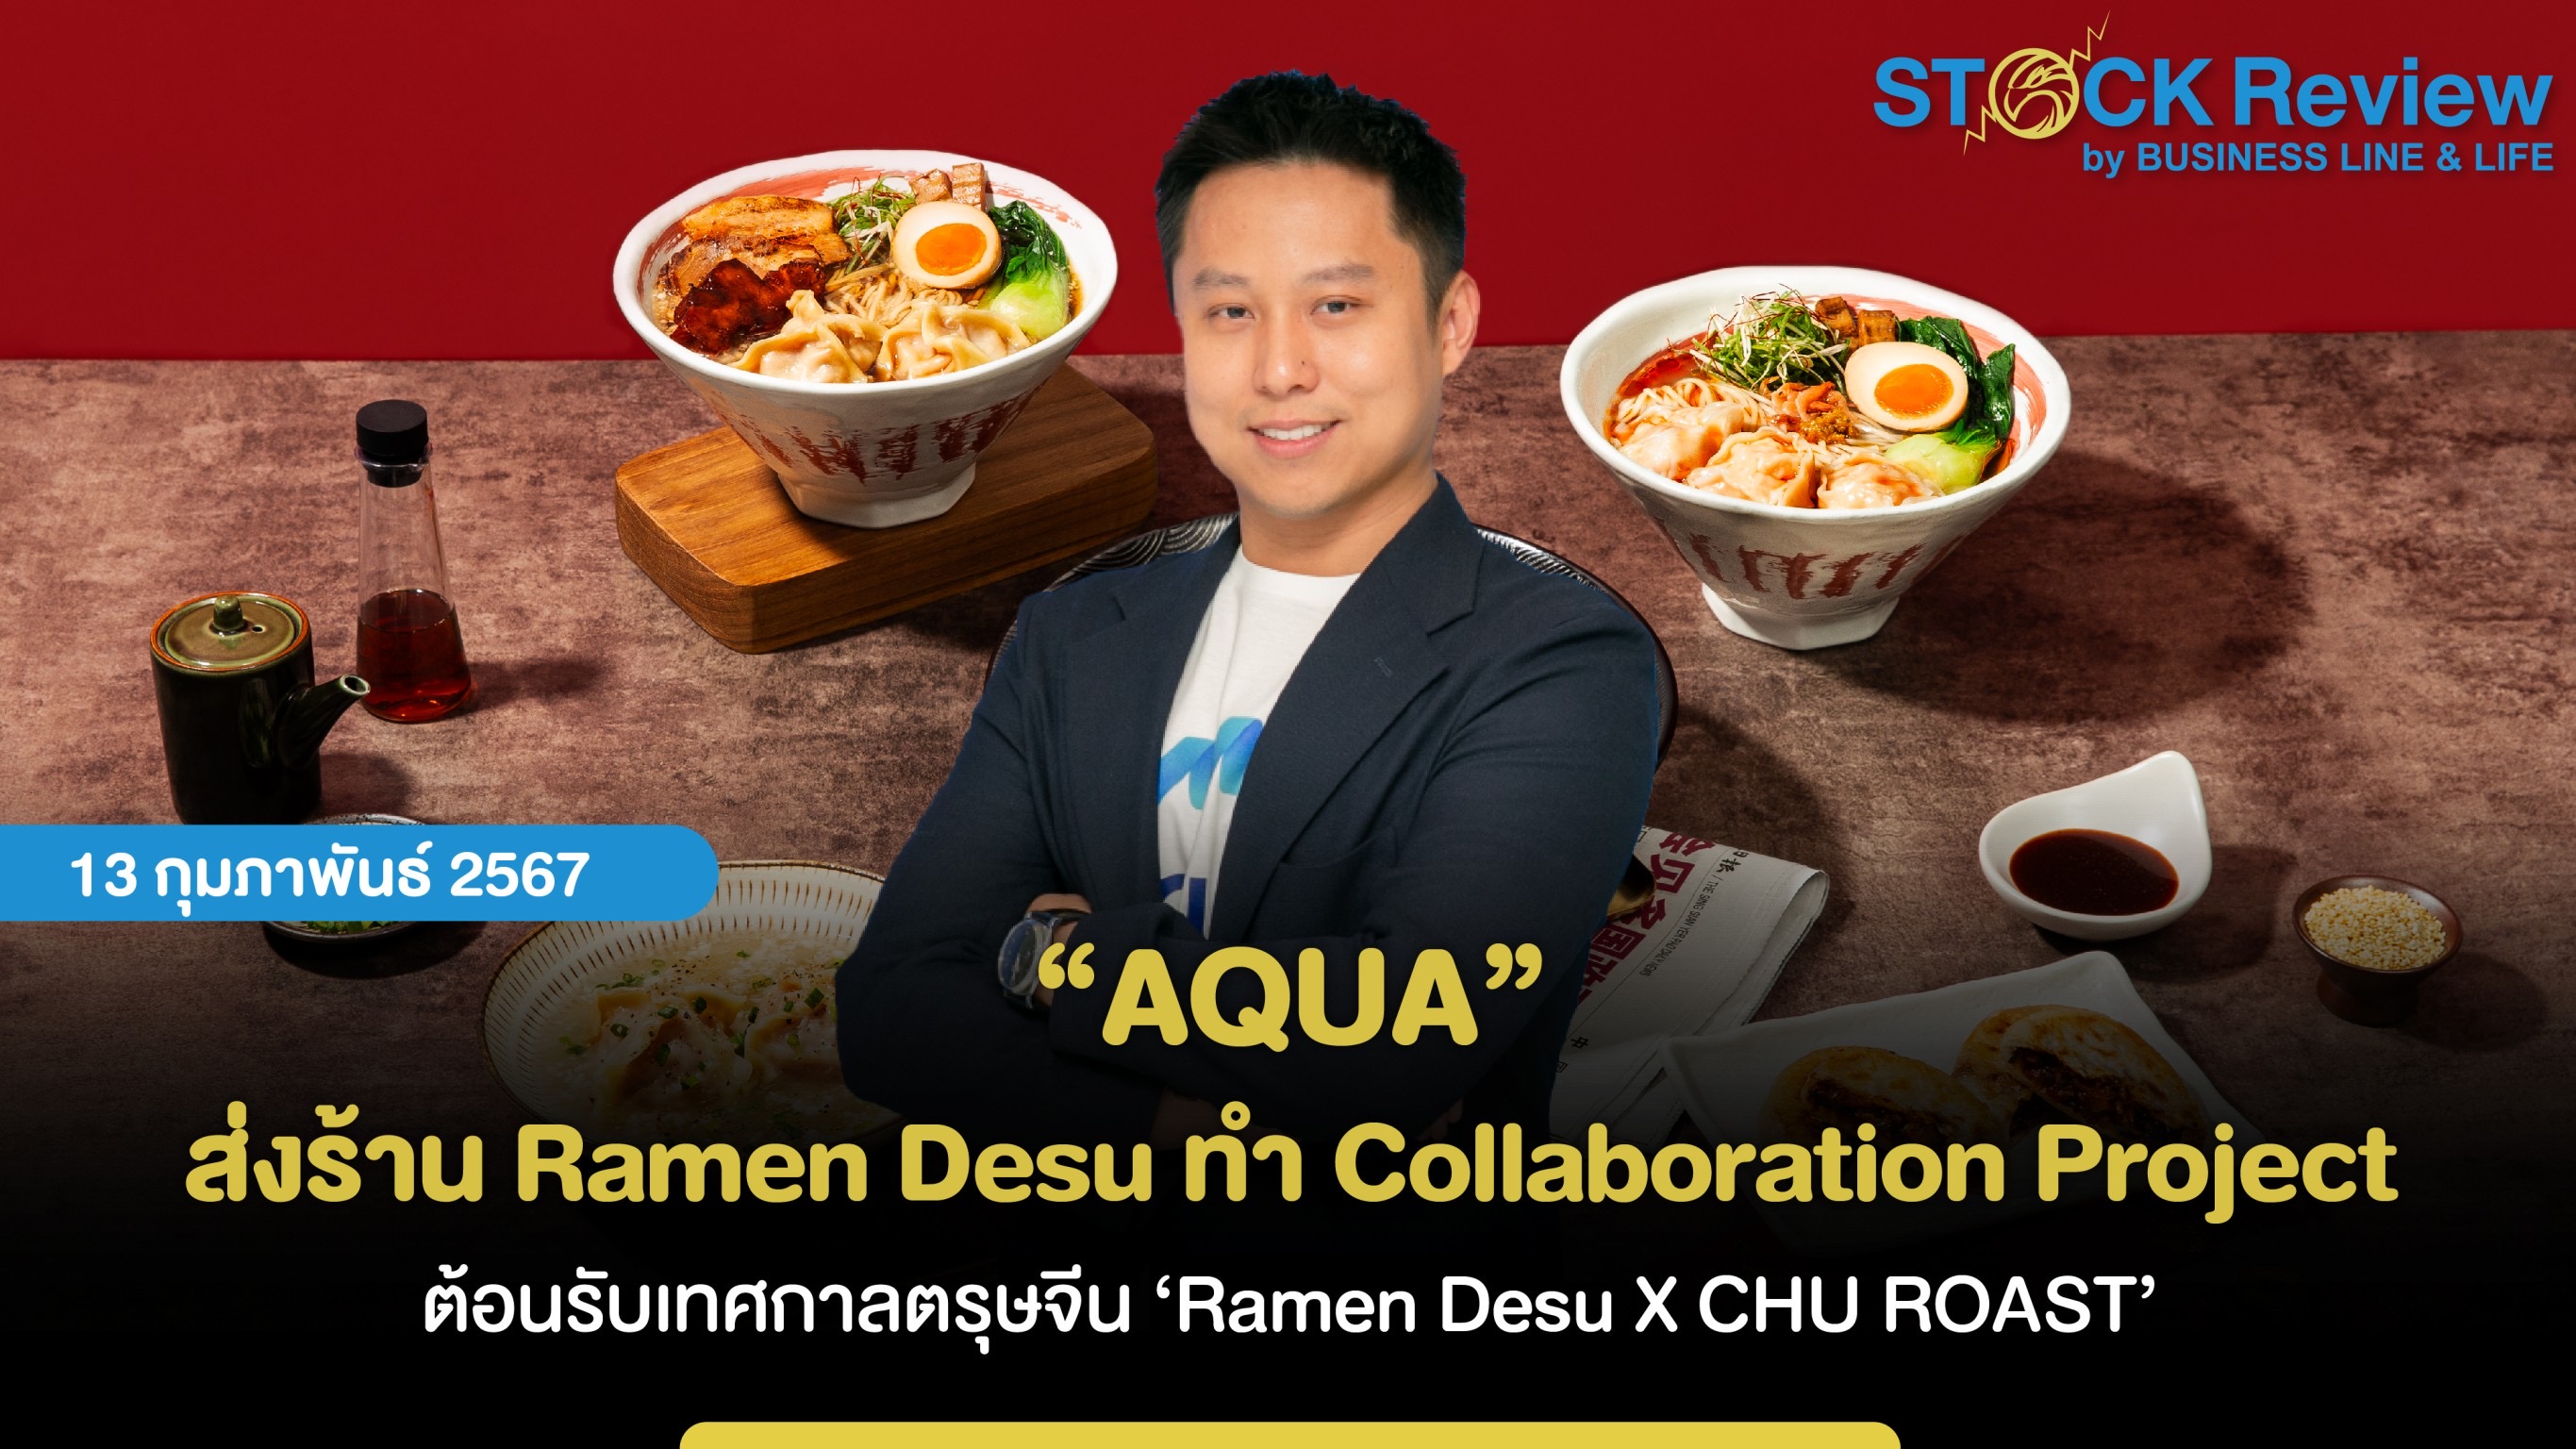 “AQUA” ส่งร้าน Ramen Desu ทำ Collaboration Project ต้อนรับเทศกาลตรุษจีน ‘Ramen Desu X CHU ROAST’